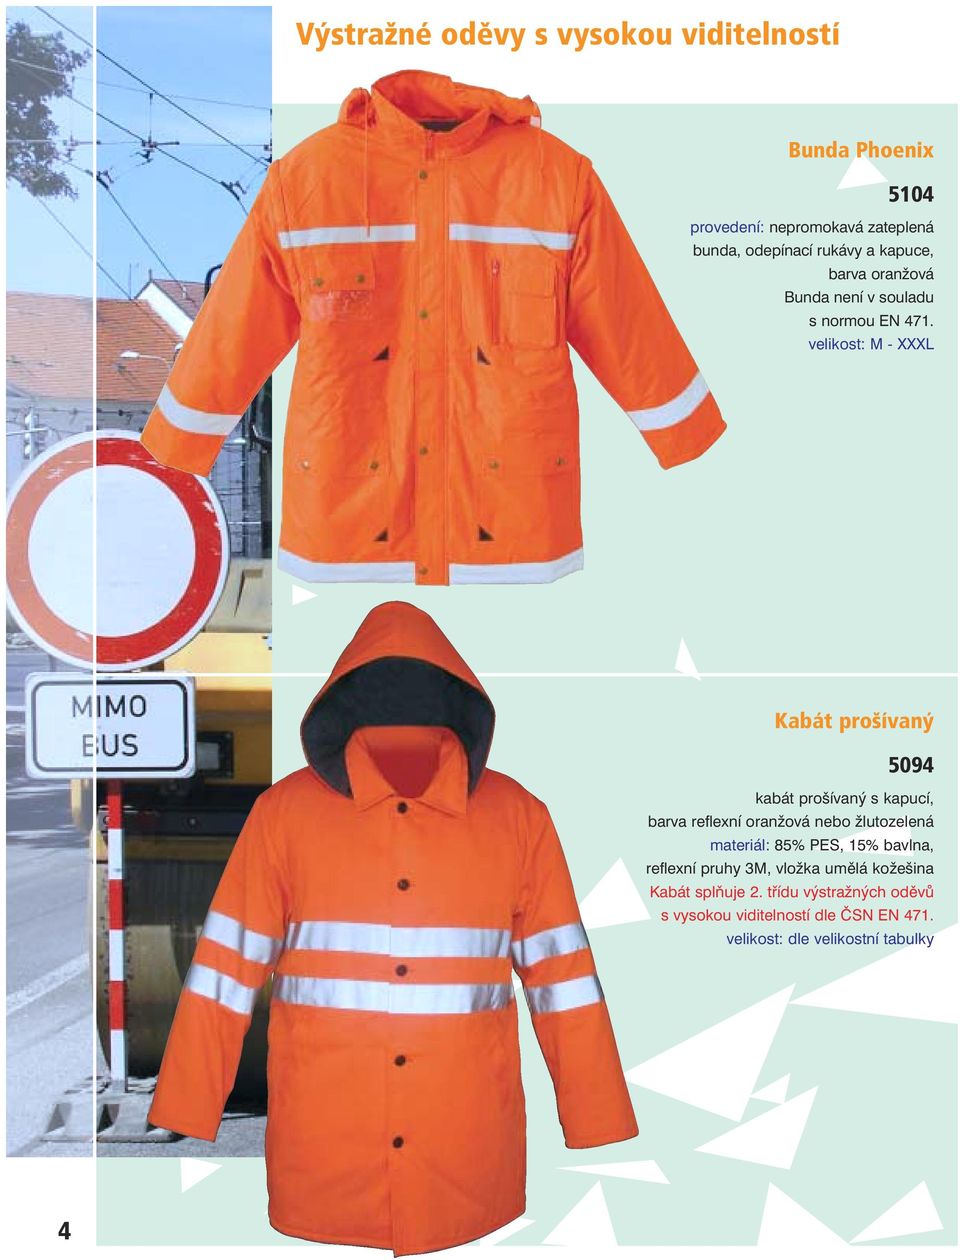 velikost: M - XXXL Kabát pro ívan 5094 kabát pro ívan s kapucí, barva reflexní oranïová nebo Ïlutozelená